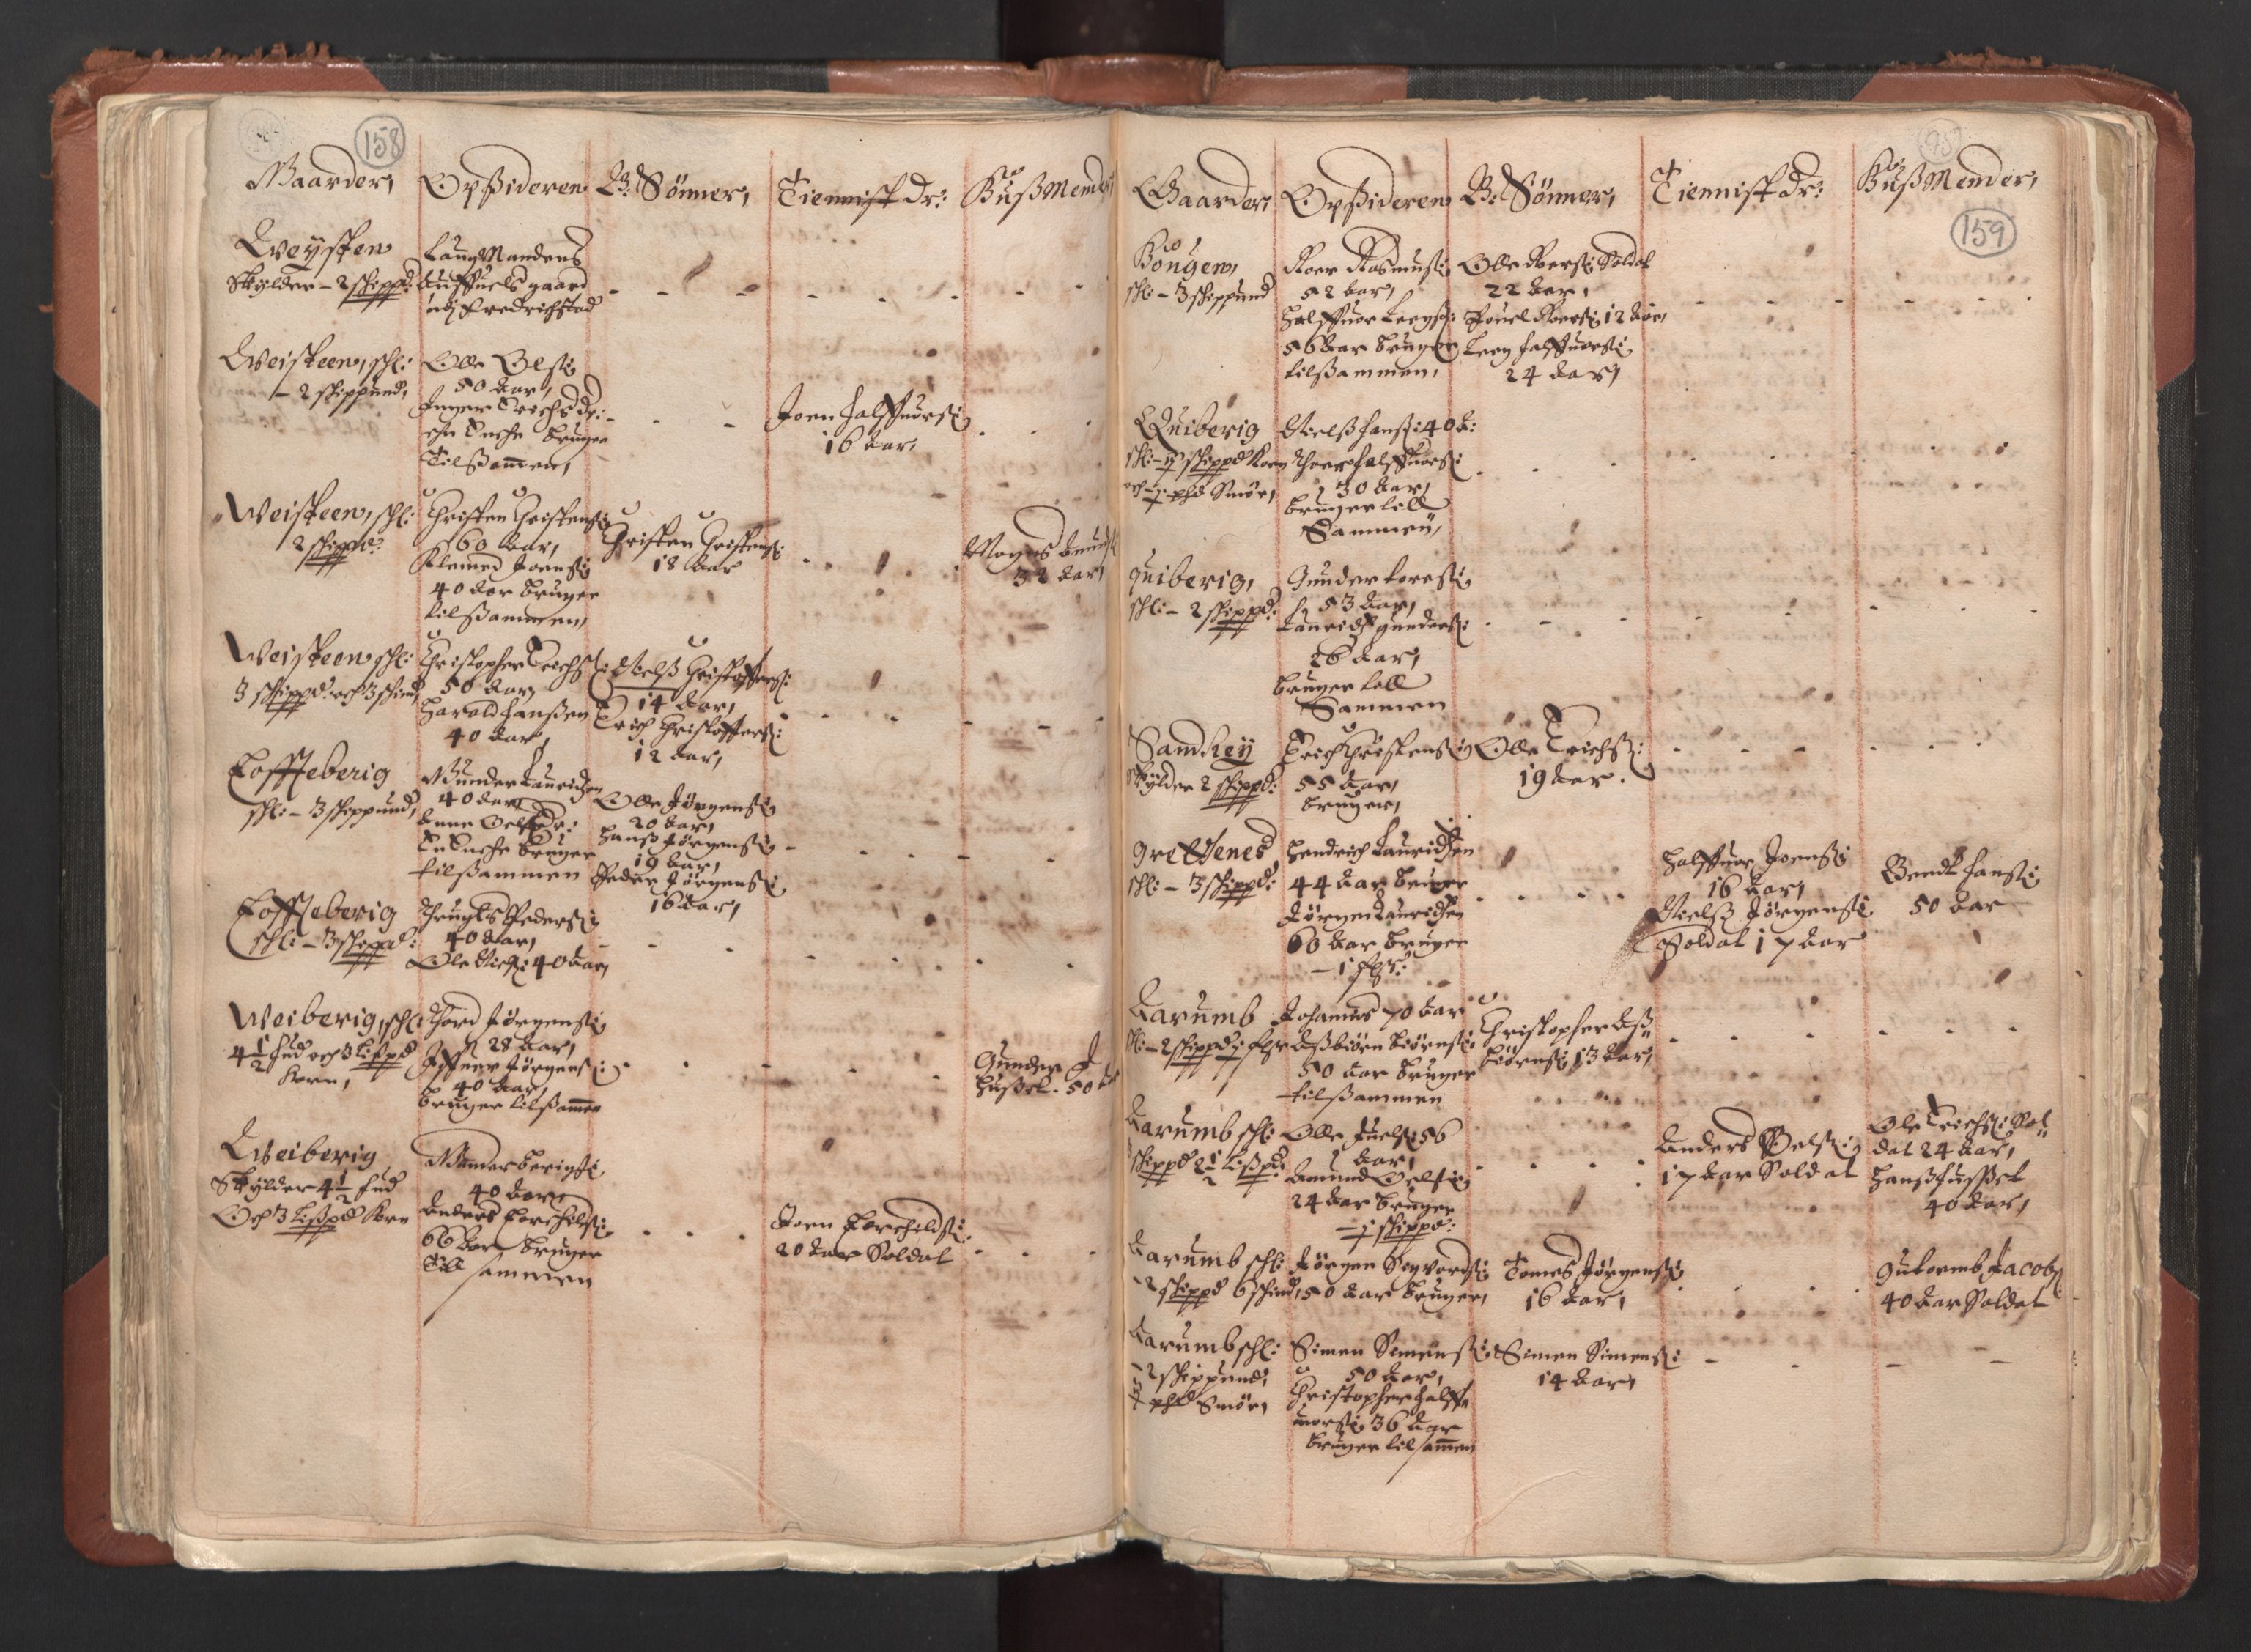 RA, Fogdenes og sorenskrivernes manntall 1664-1666, nr. 1: Fogderier (len og skipreider) i nåværende Østfold fylke, 1664, s. 158-159